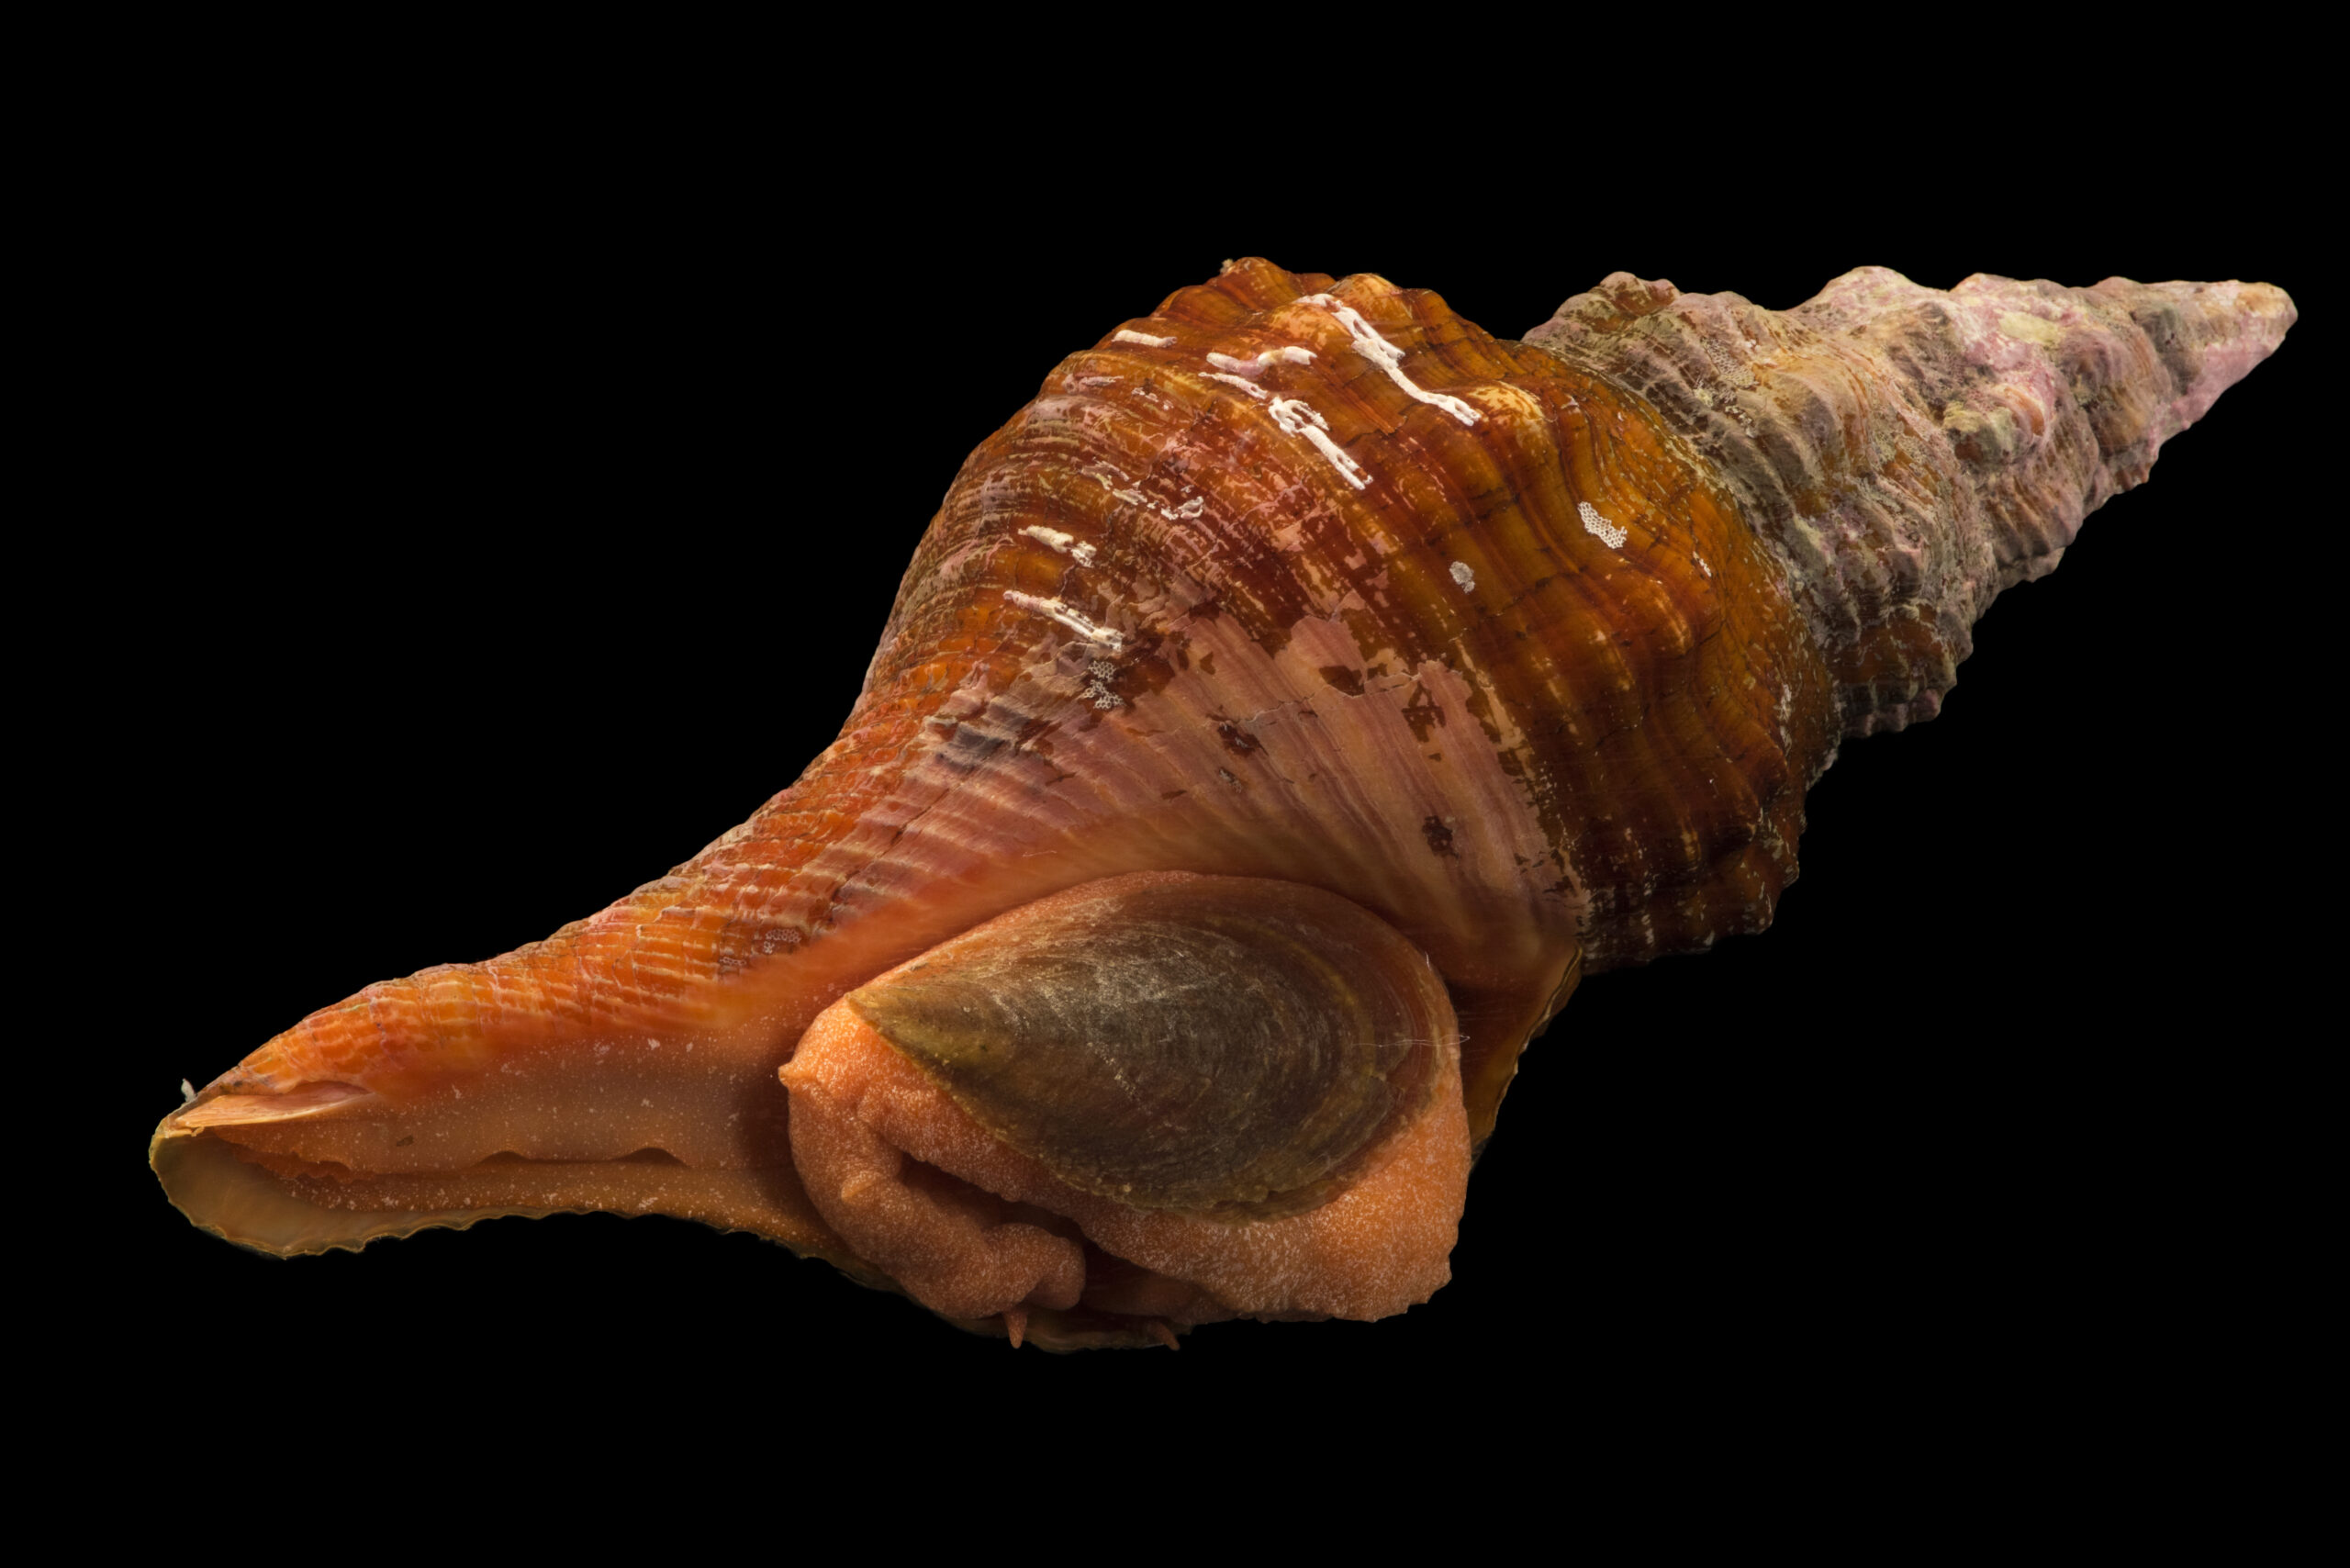 Horse conch (Pleuroploca gigantea)